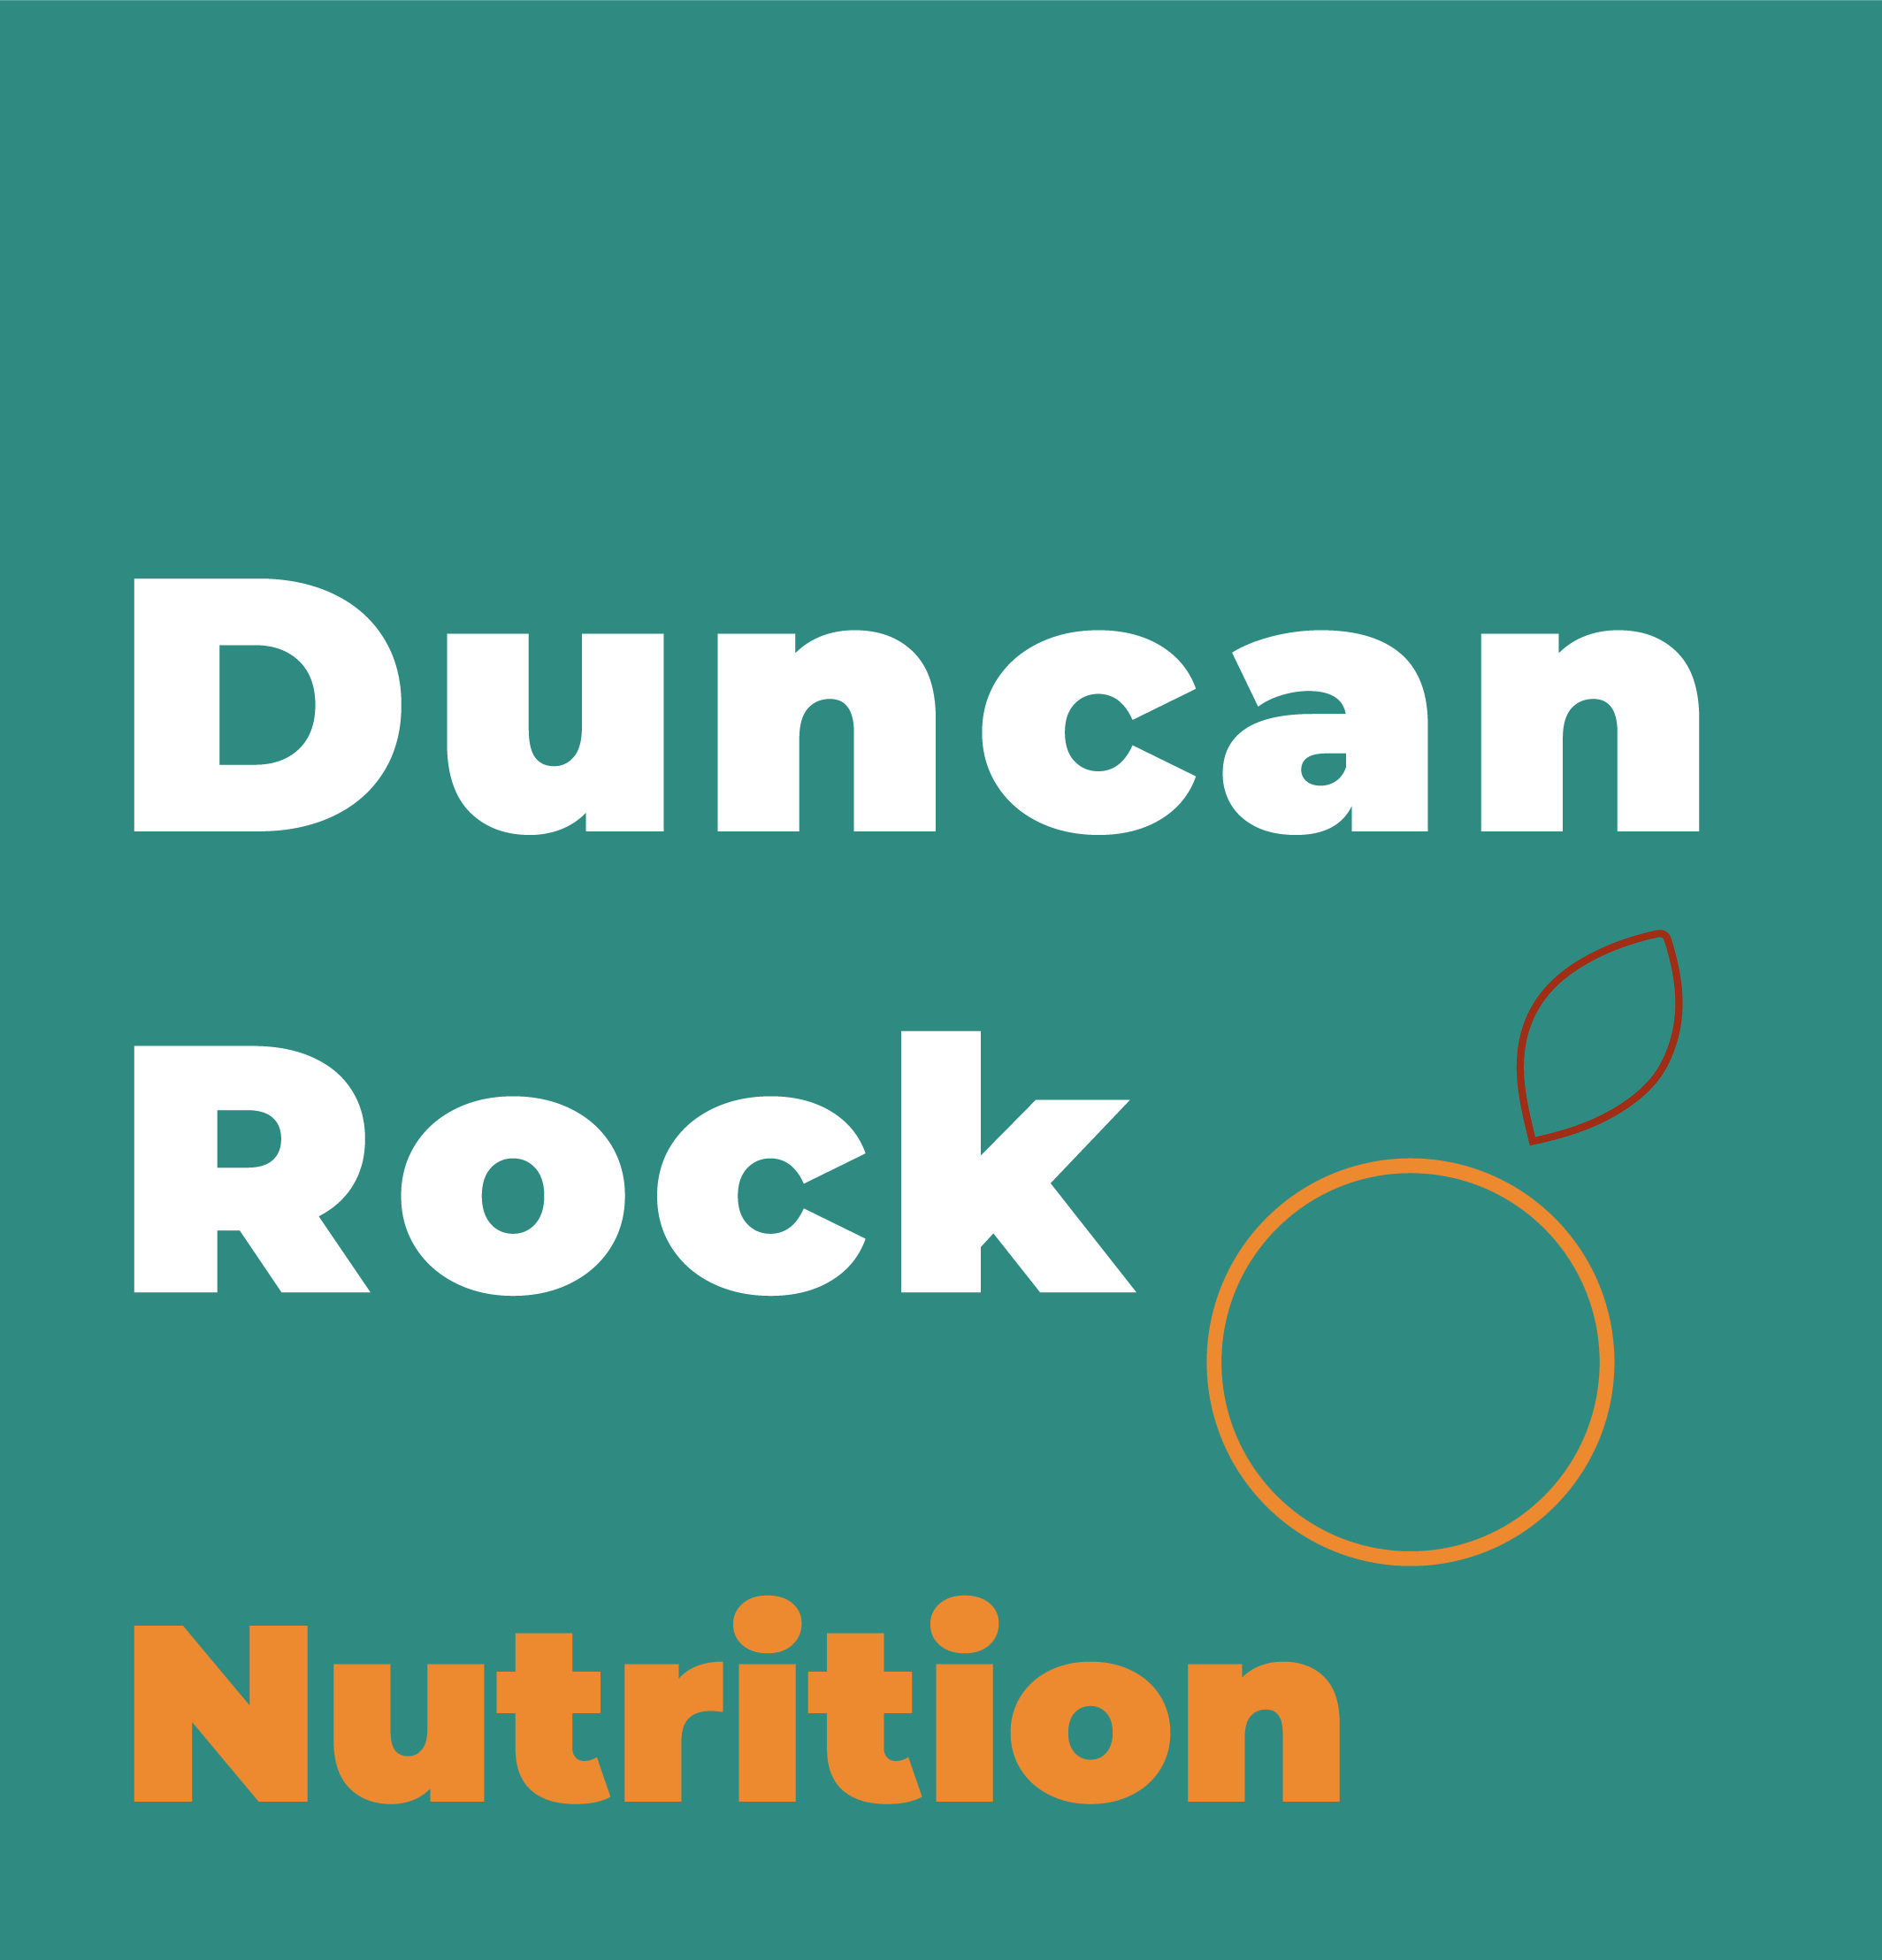 Duncan Rock Nutrition